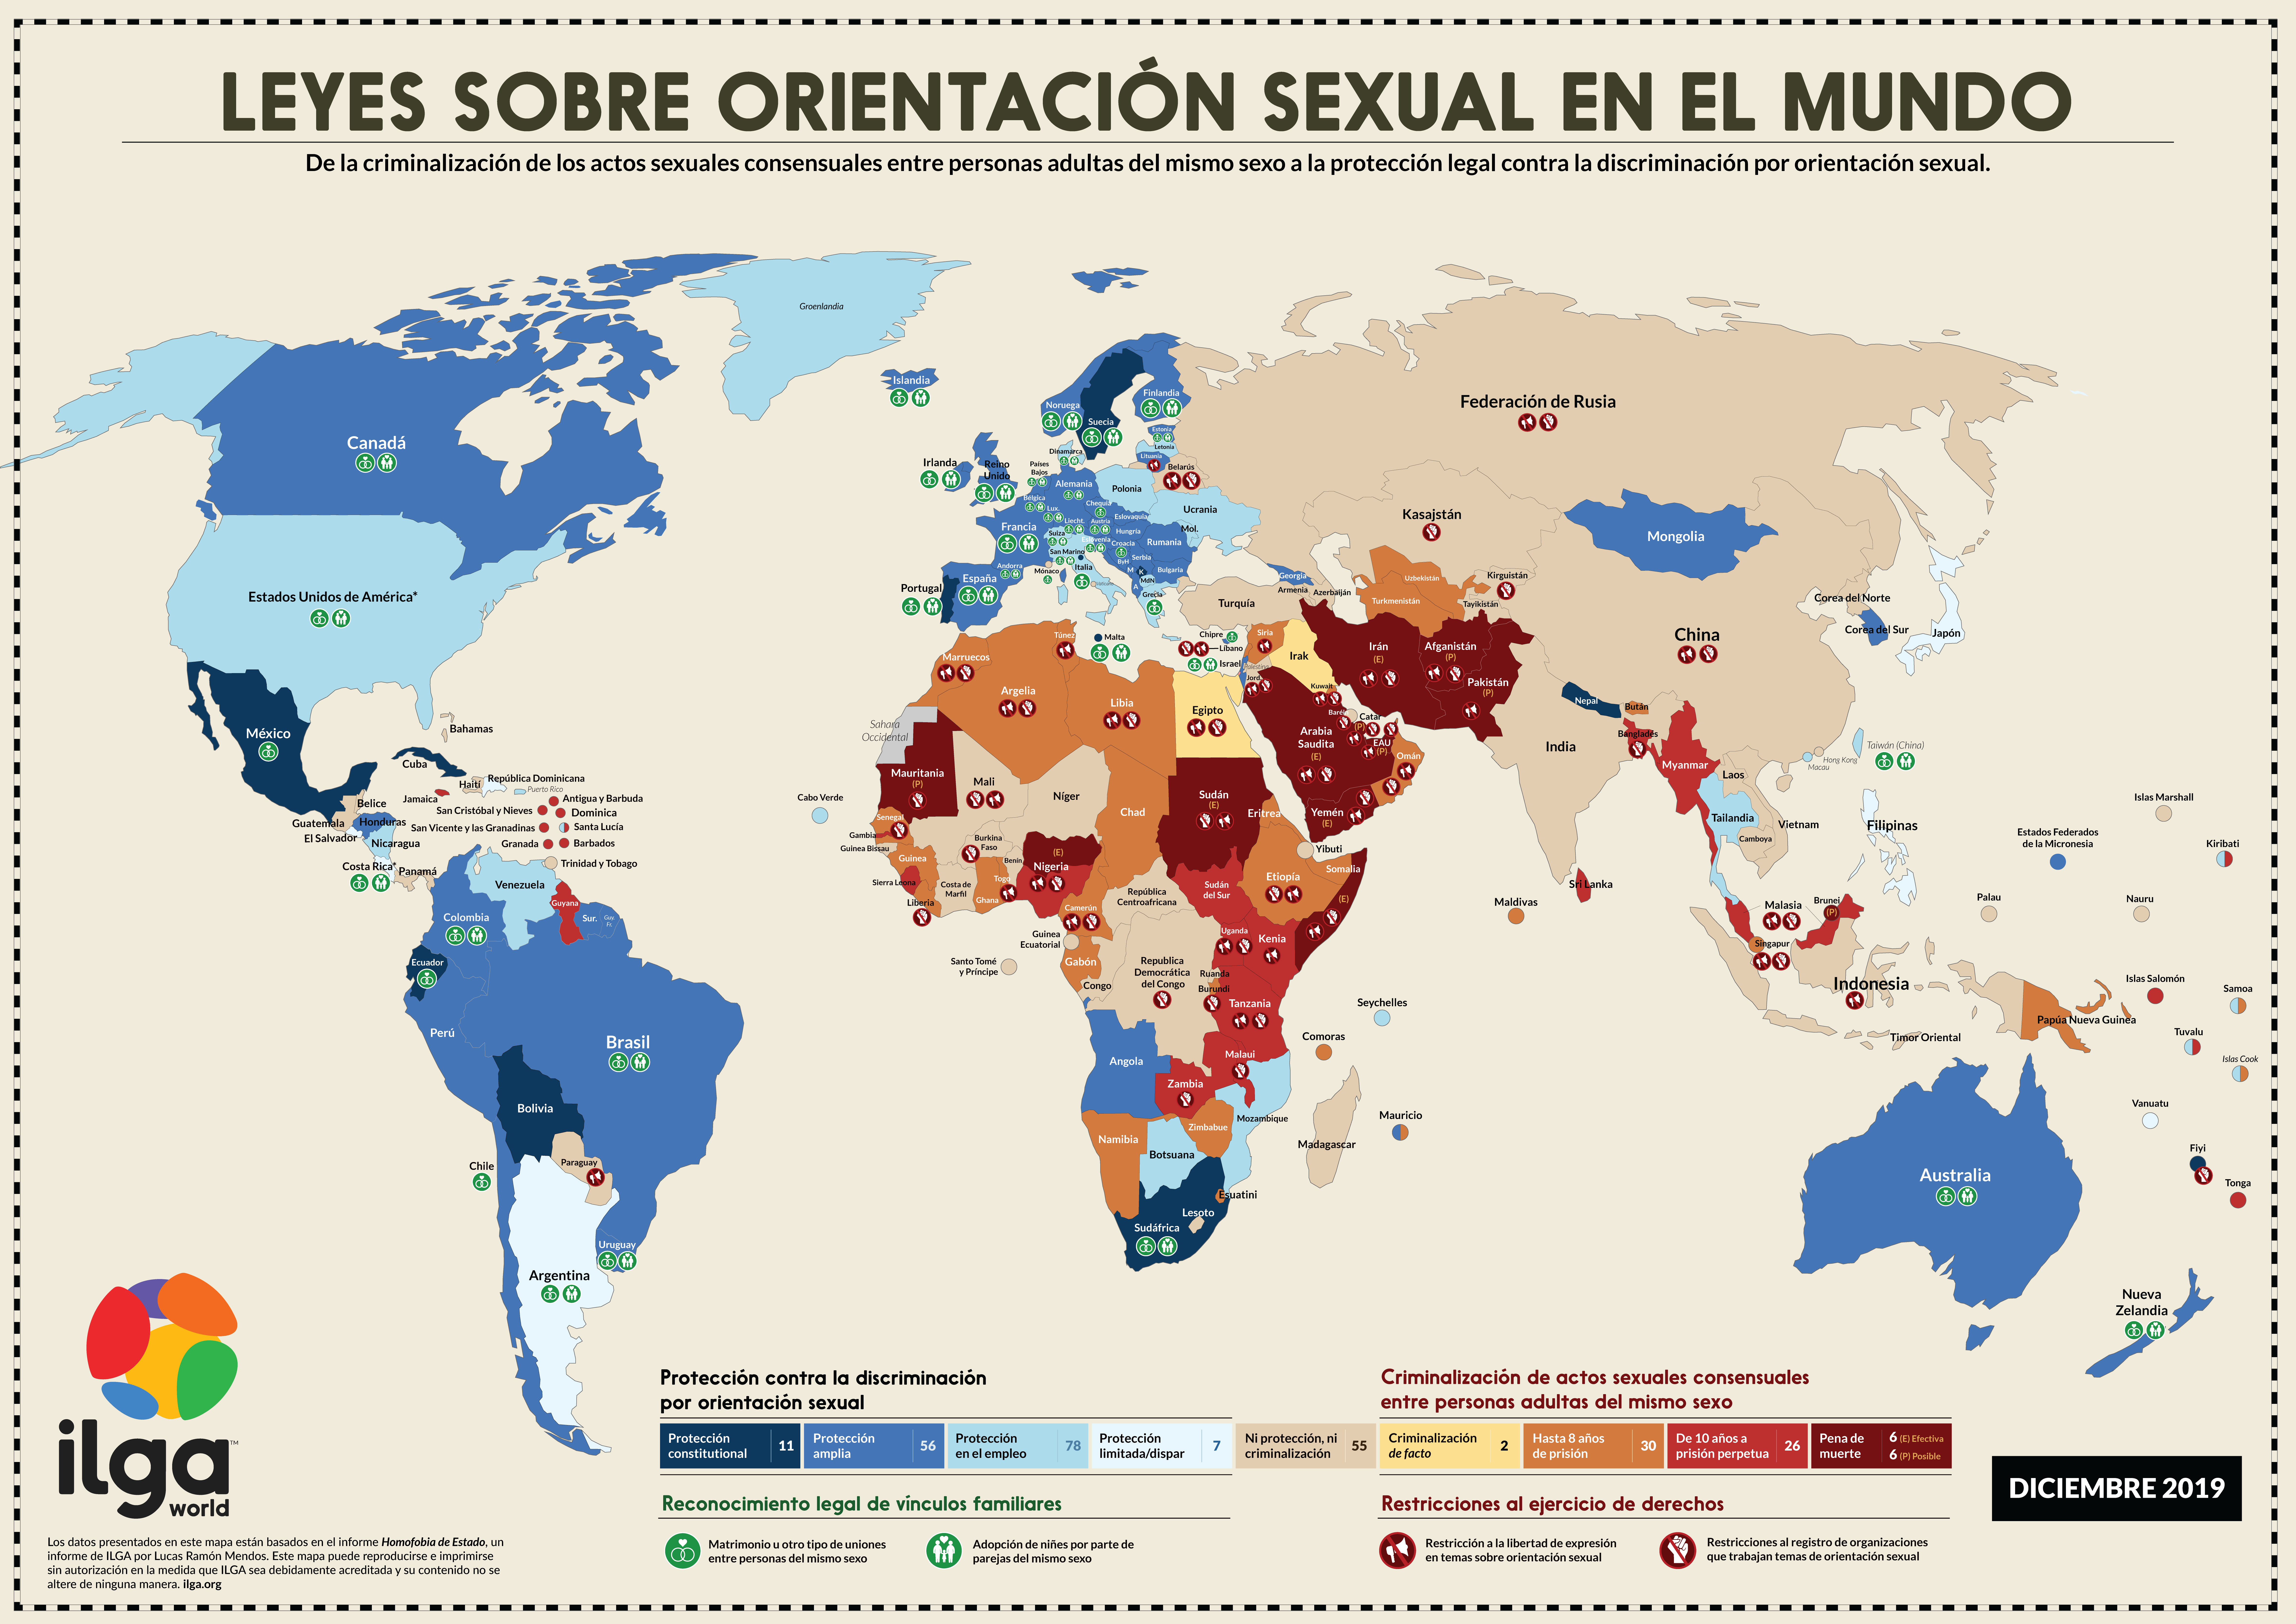 SPA_ILGA_World_map_sexual_orientation_laws_dec2019_update